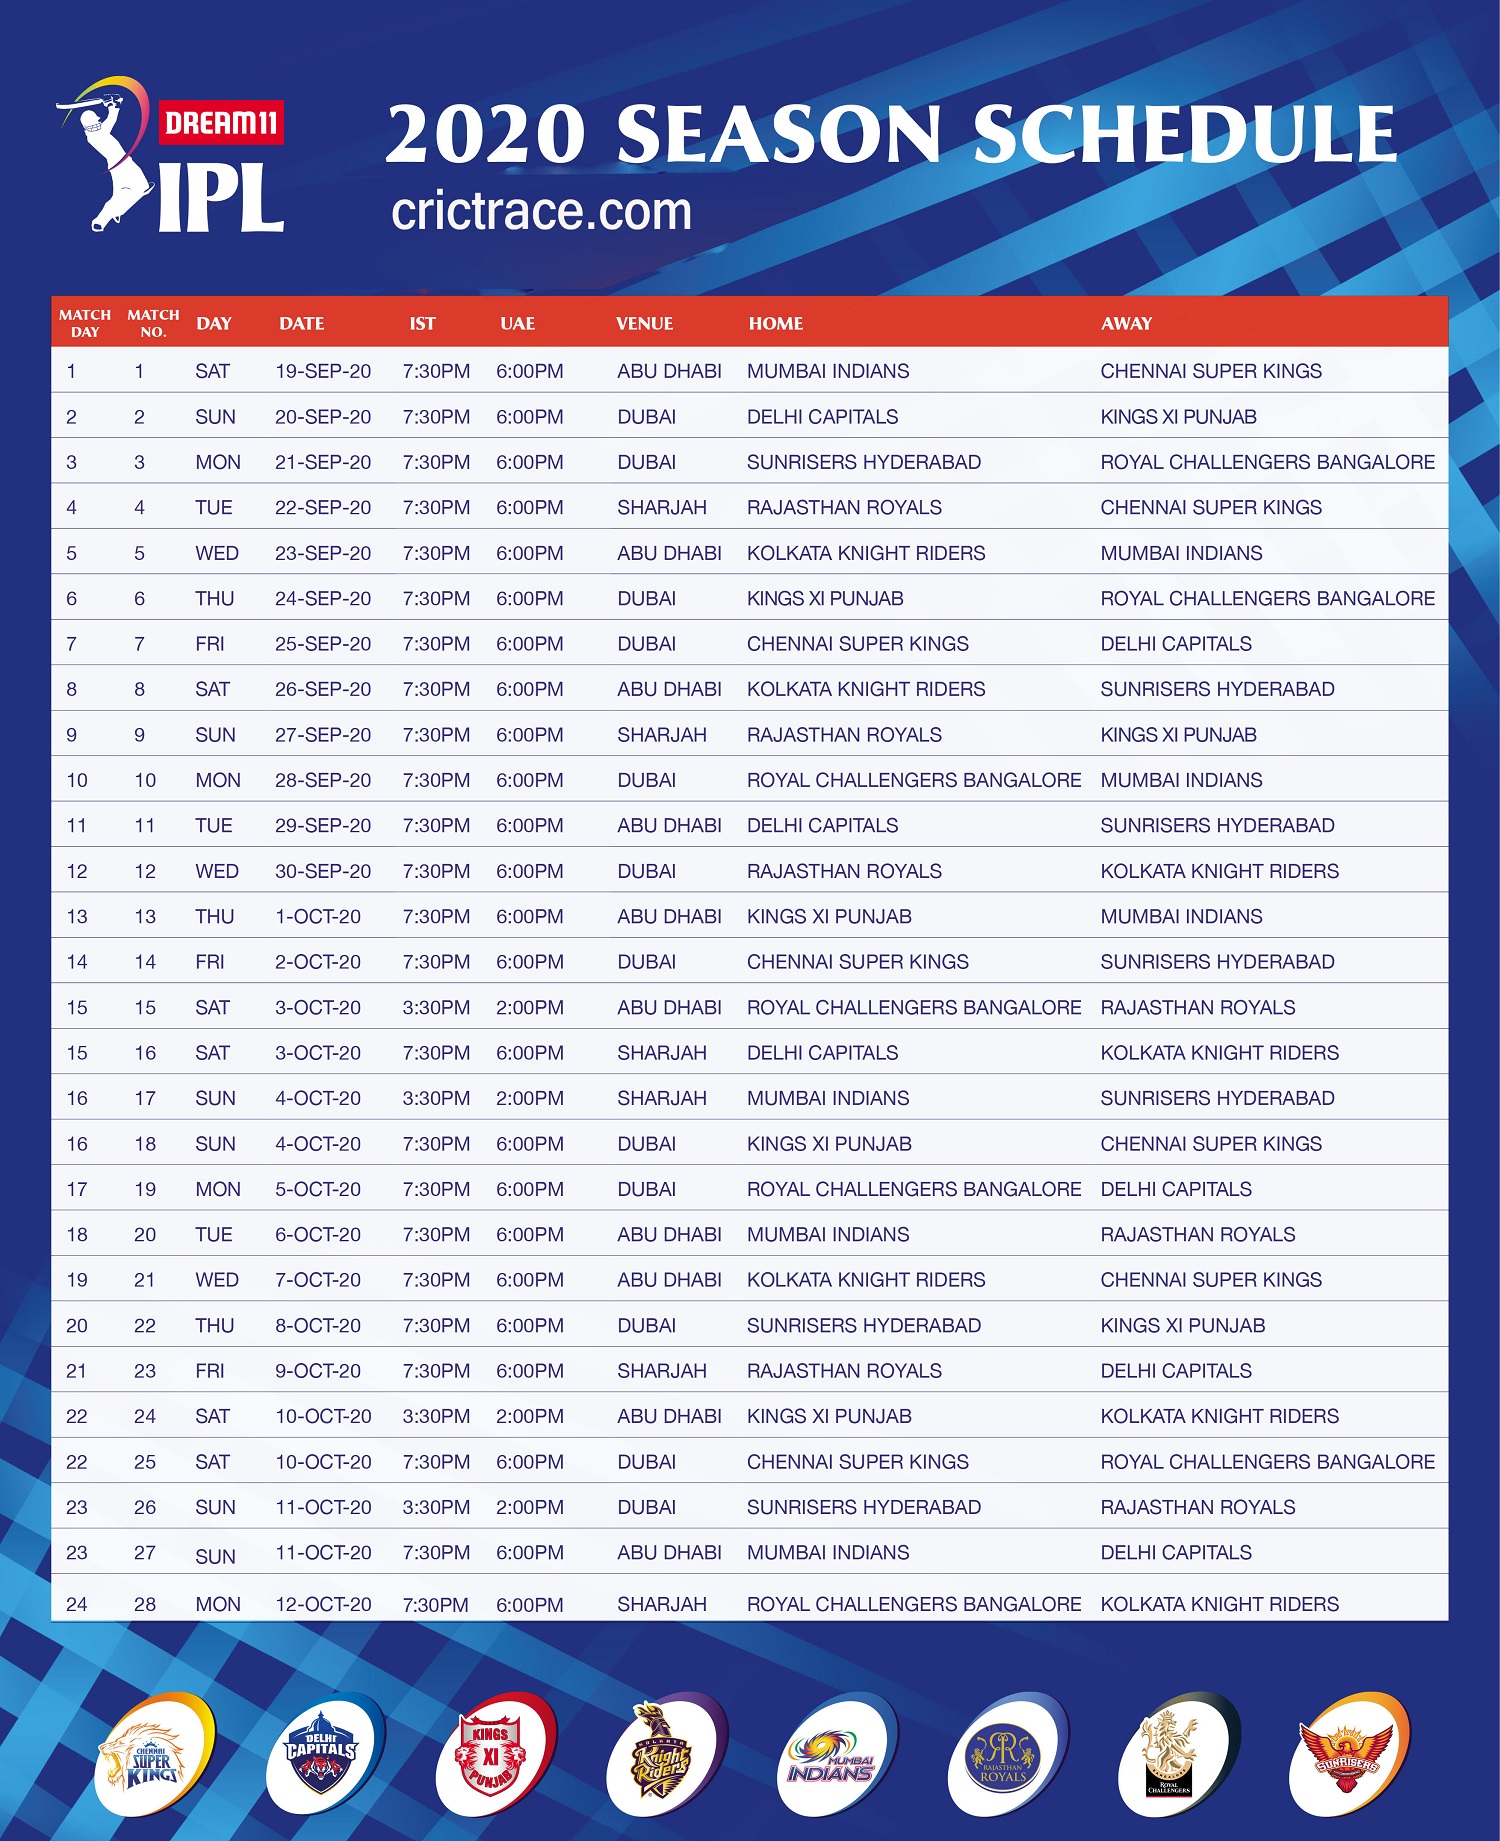  Dream11 IPL 2020 new schedule